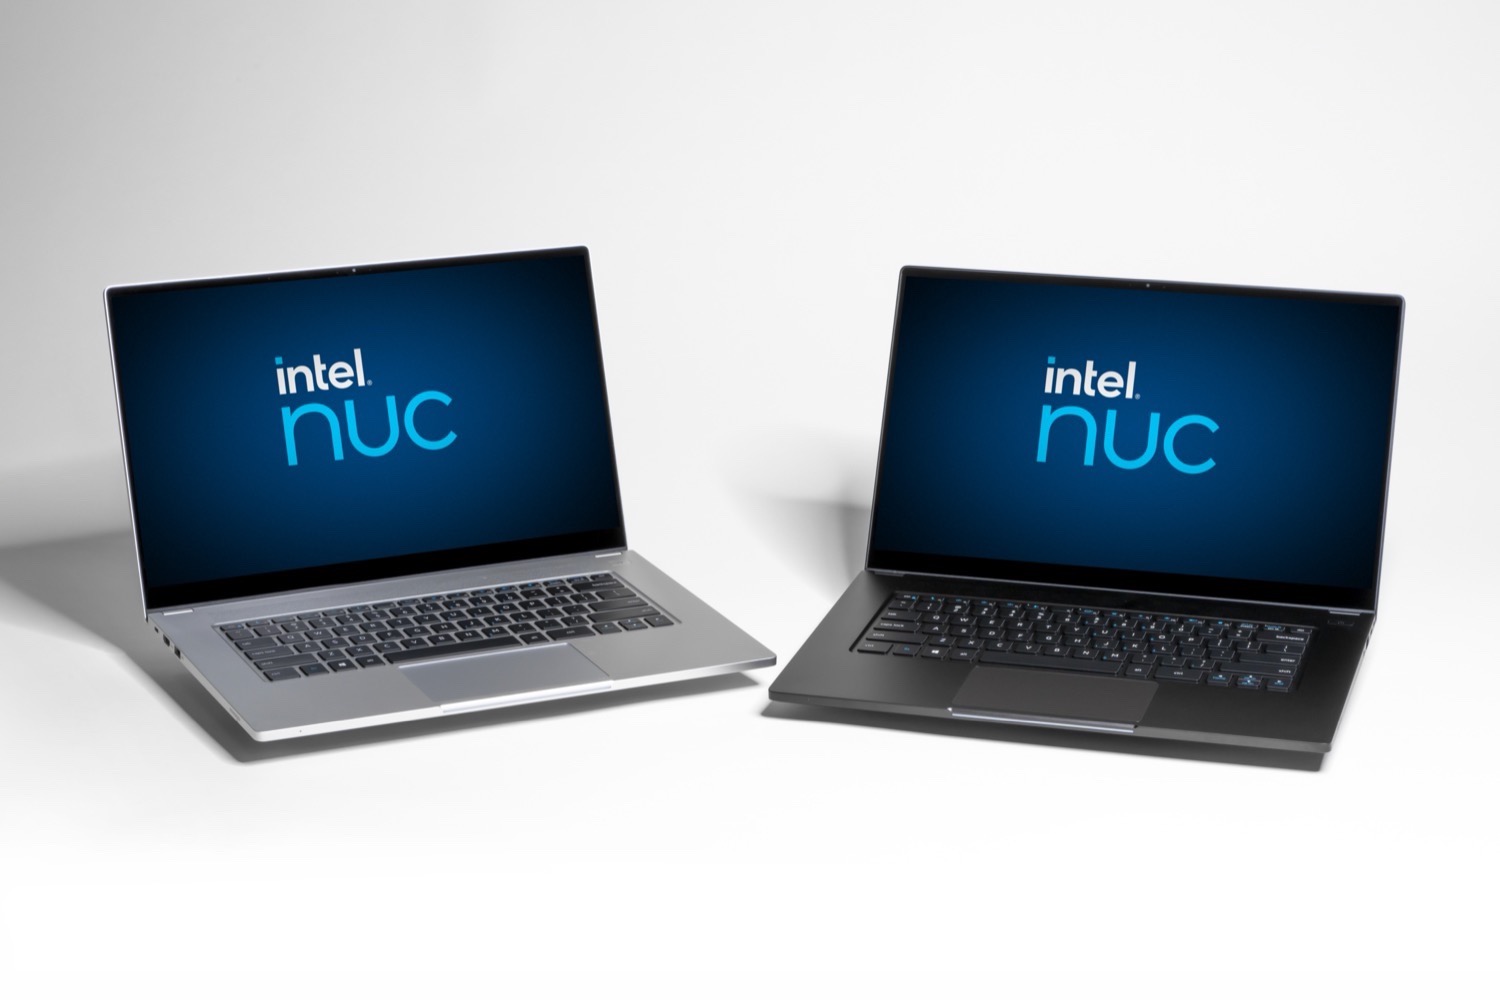 Intel NUC M15 Laptop Kit, for the whitebook market, revealed - Laptop